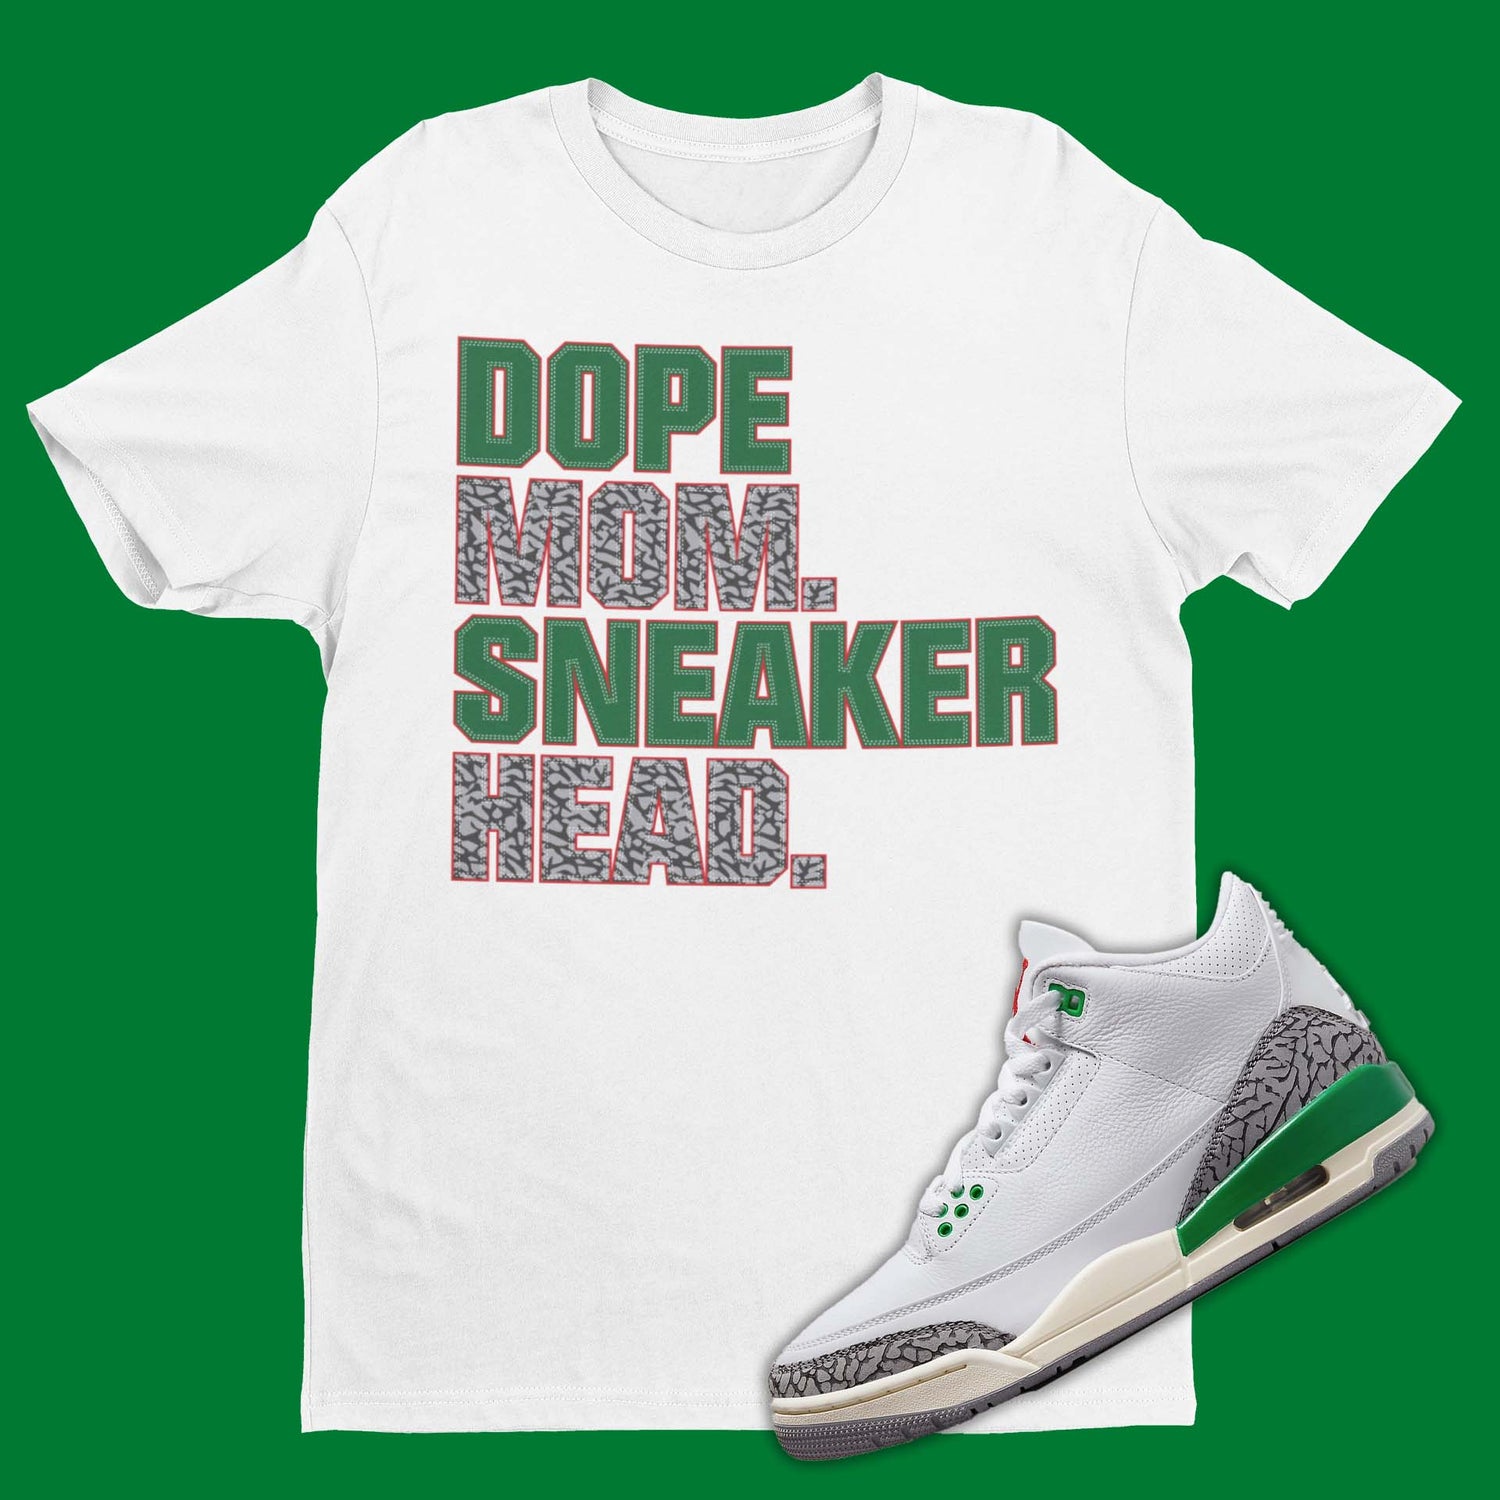 mom sneakerhead shirt in white designed to match the air jordan 3 lucky green